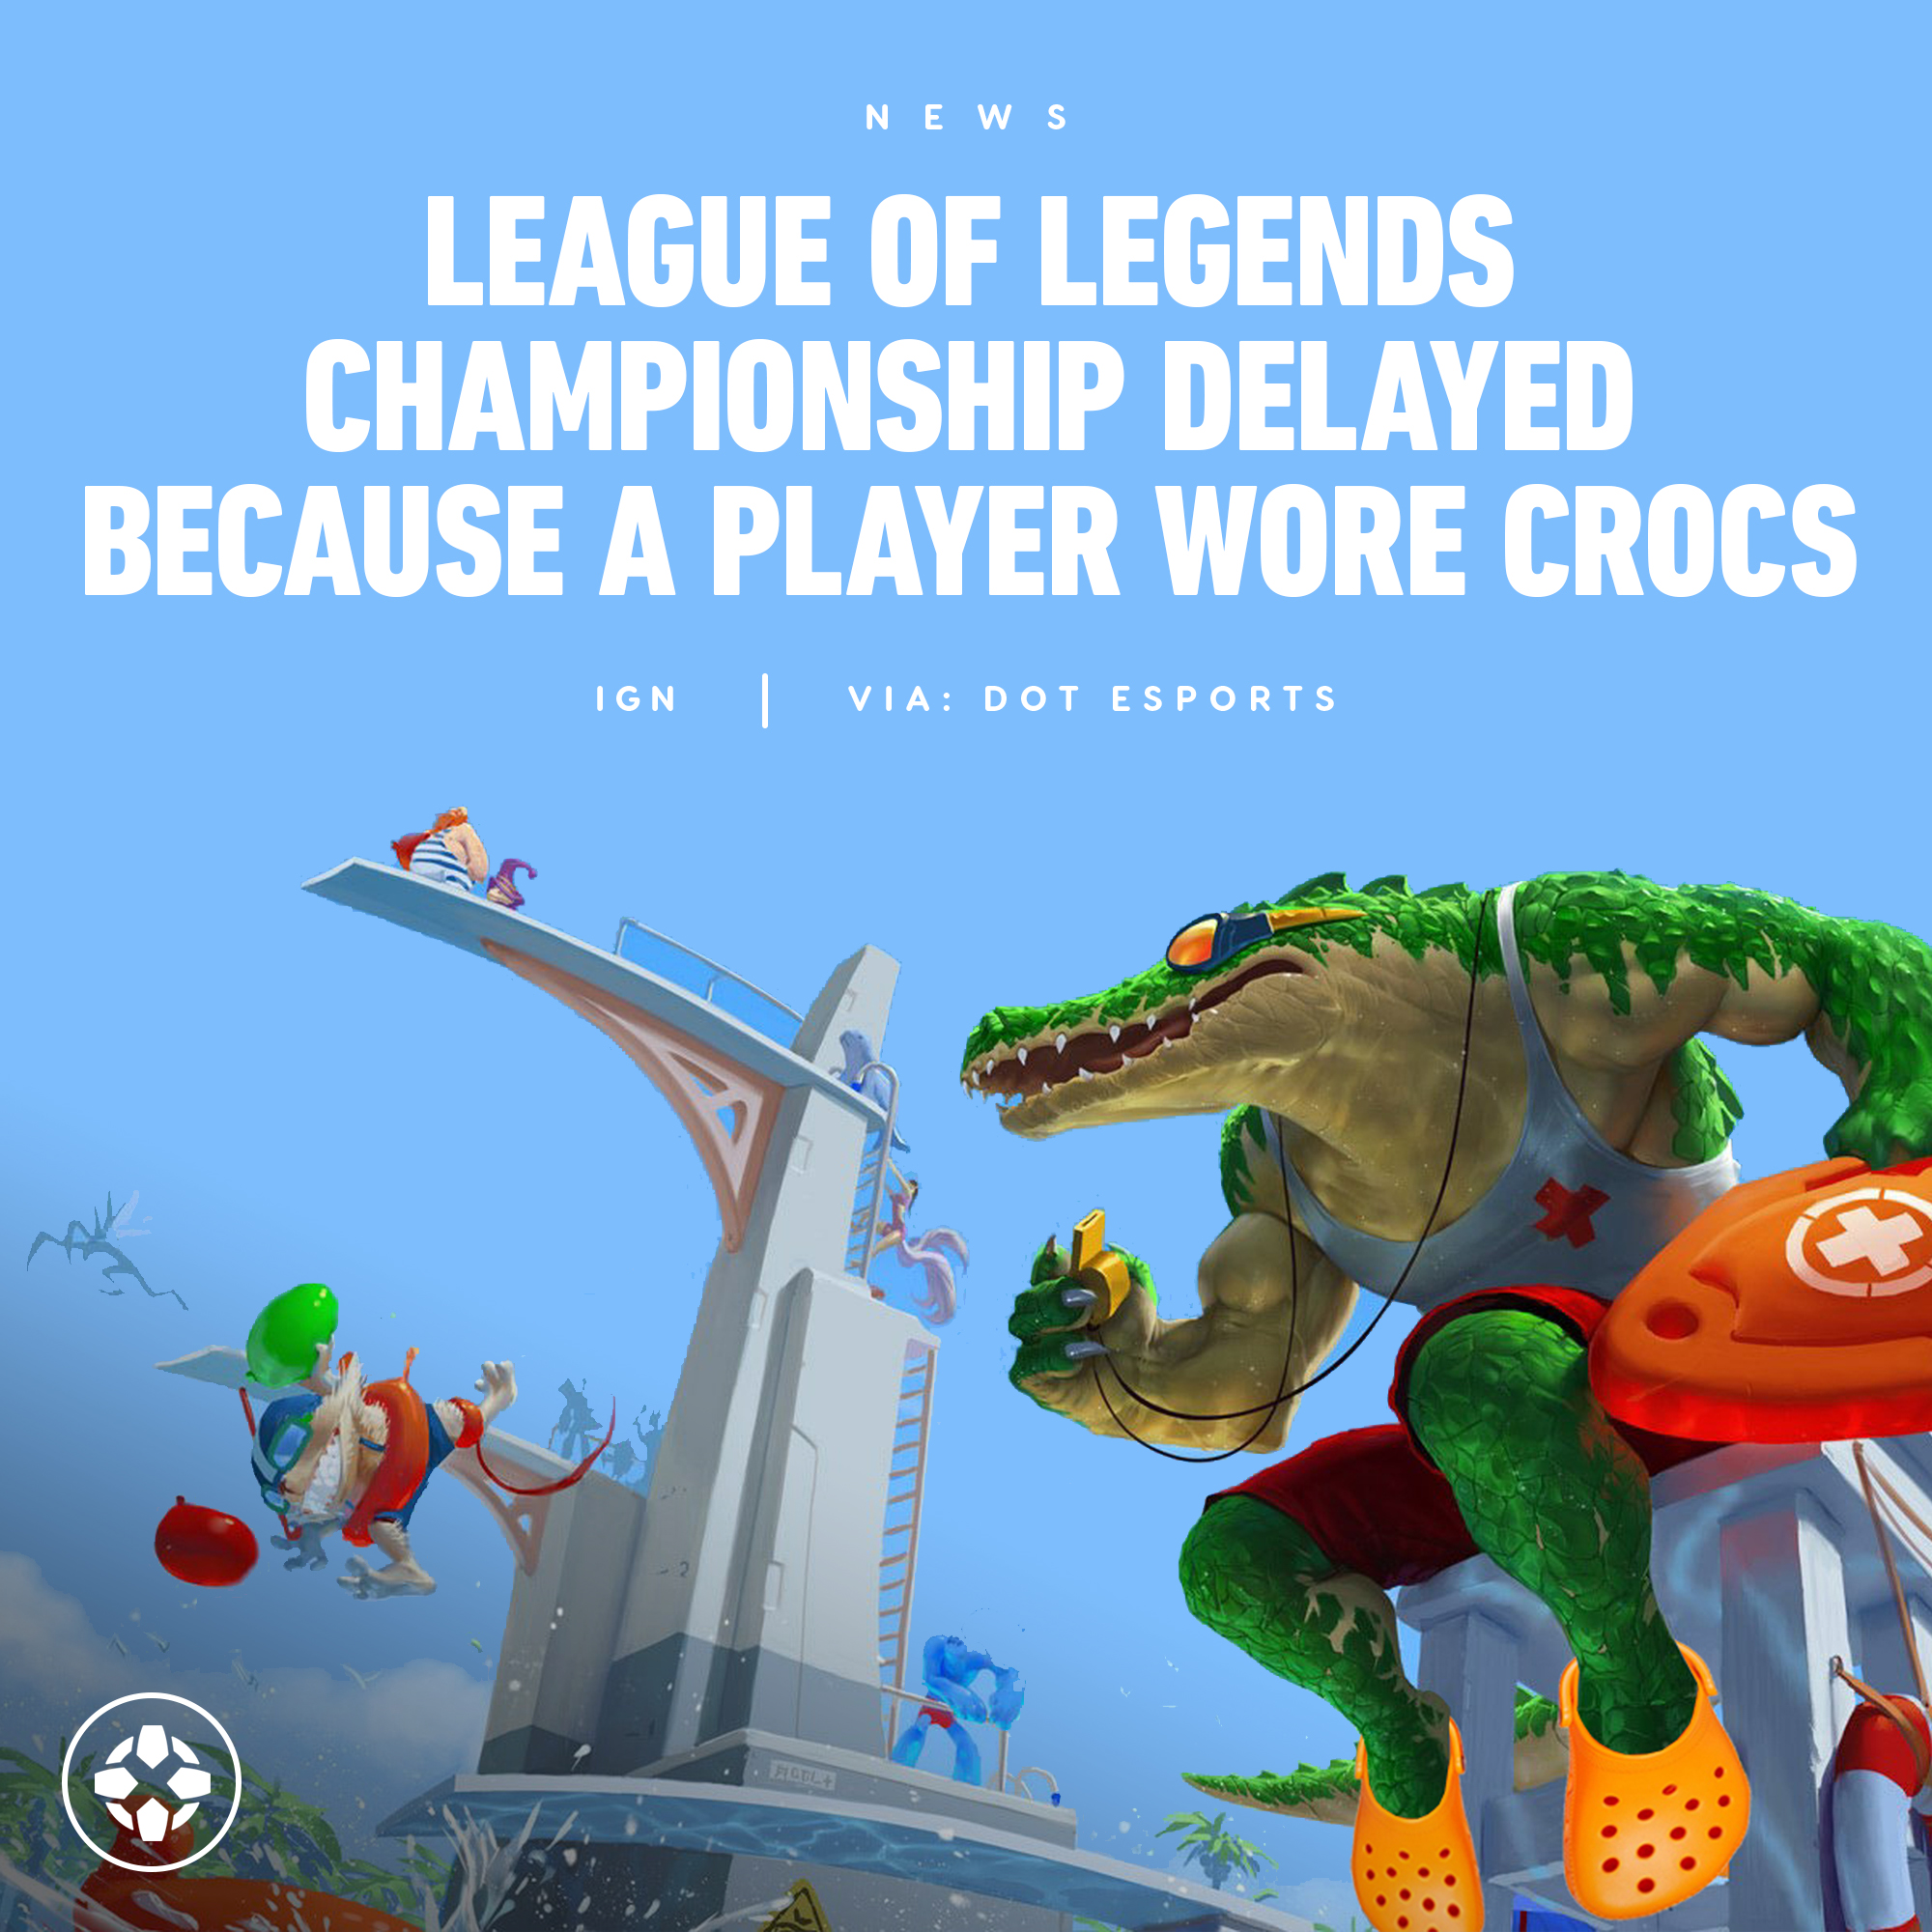 League of Legends - IGN